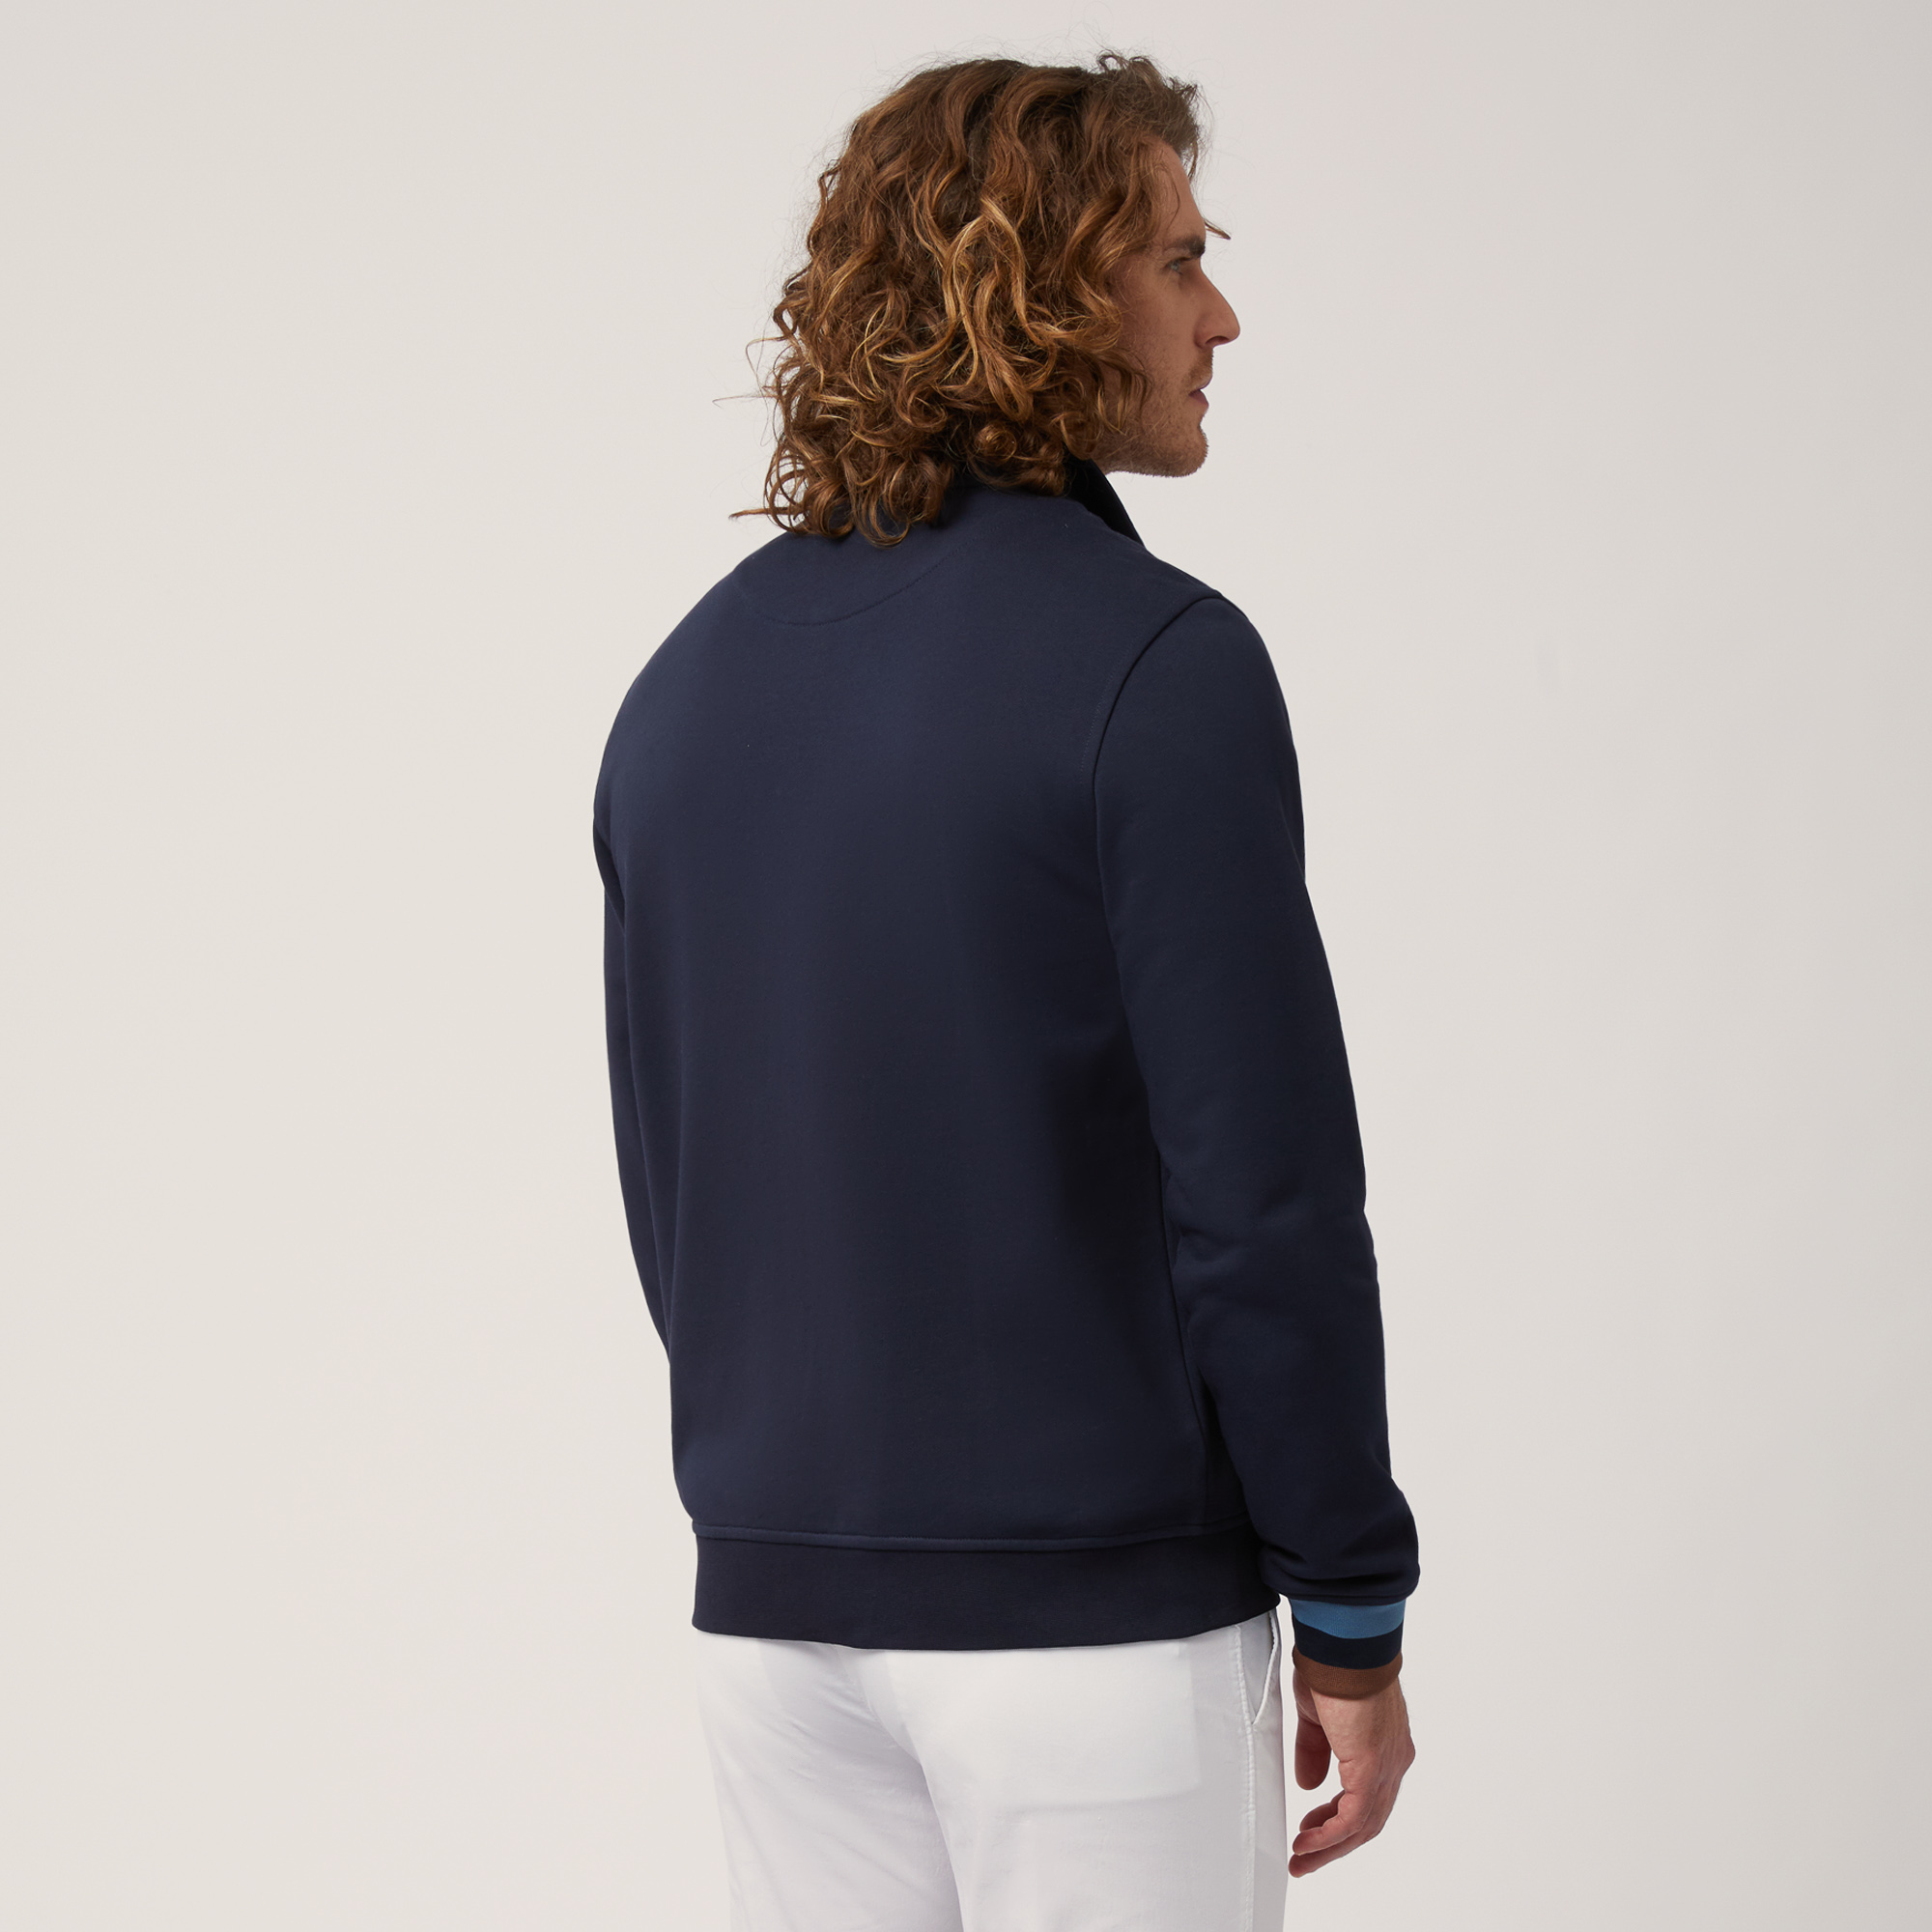 Cotton Full-Zip Sweatshirt with Striped Details